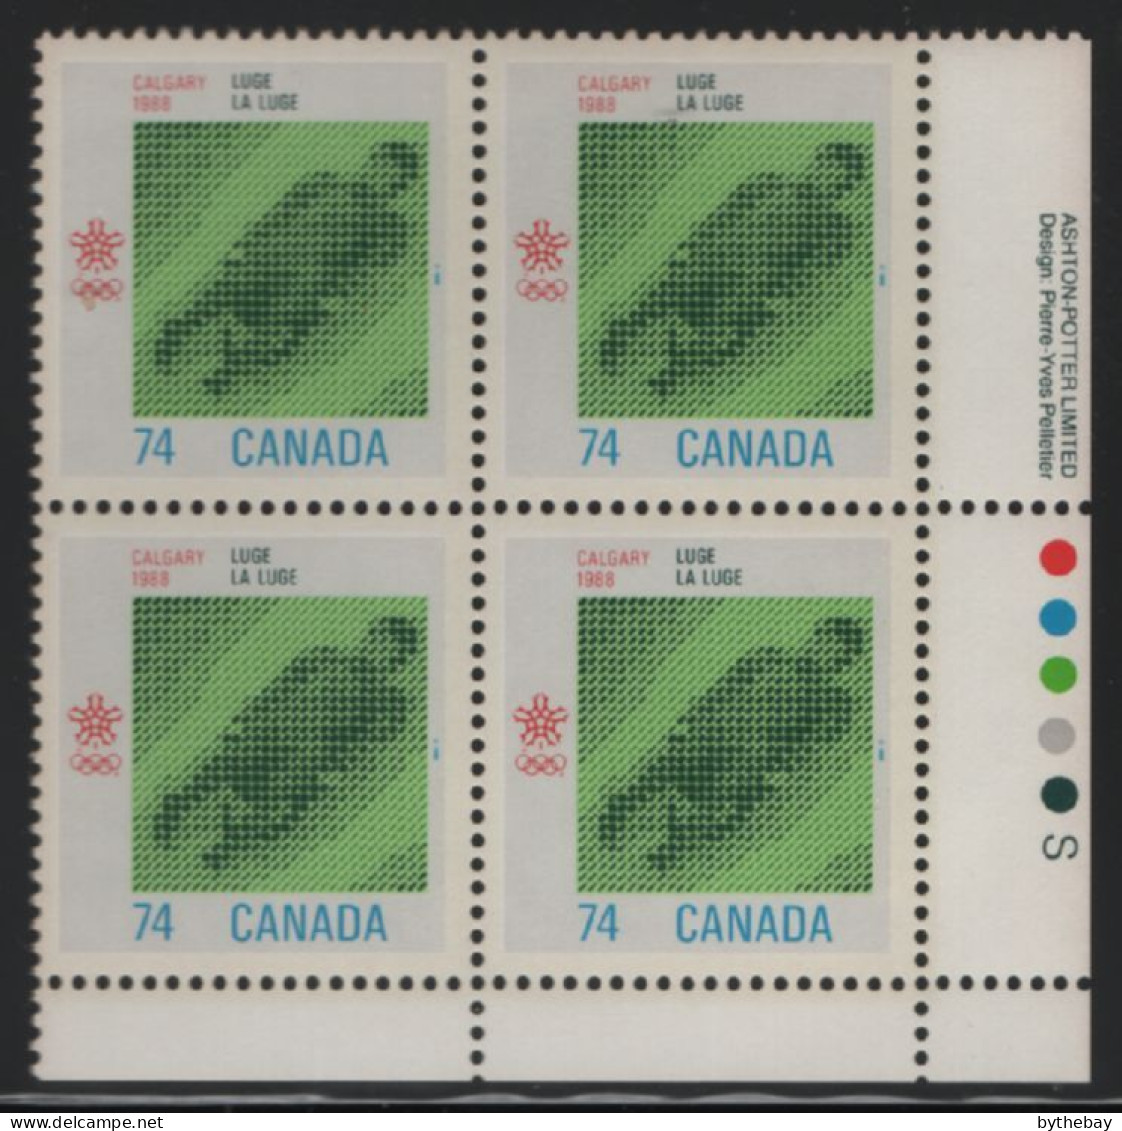 Canada 1988 MNH Sc 1198 74c Luge LR Plate Block - Plate Number & Inscriptions